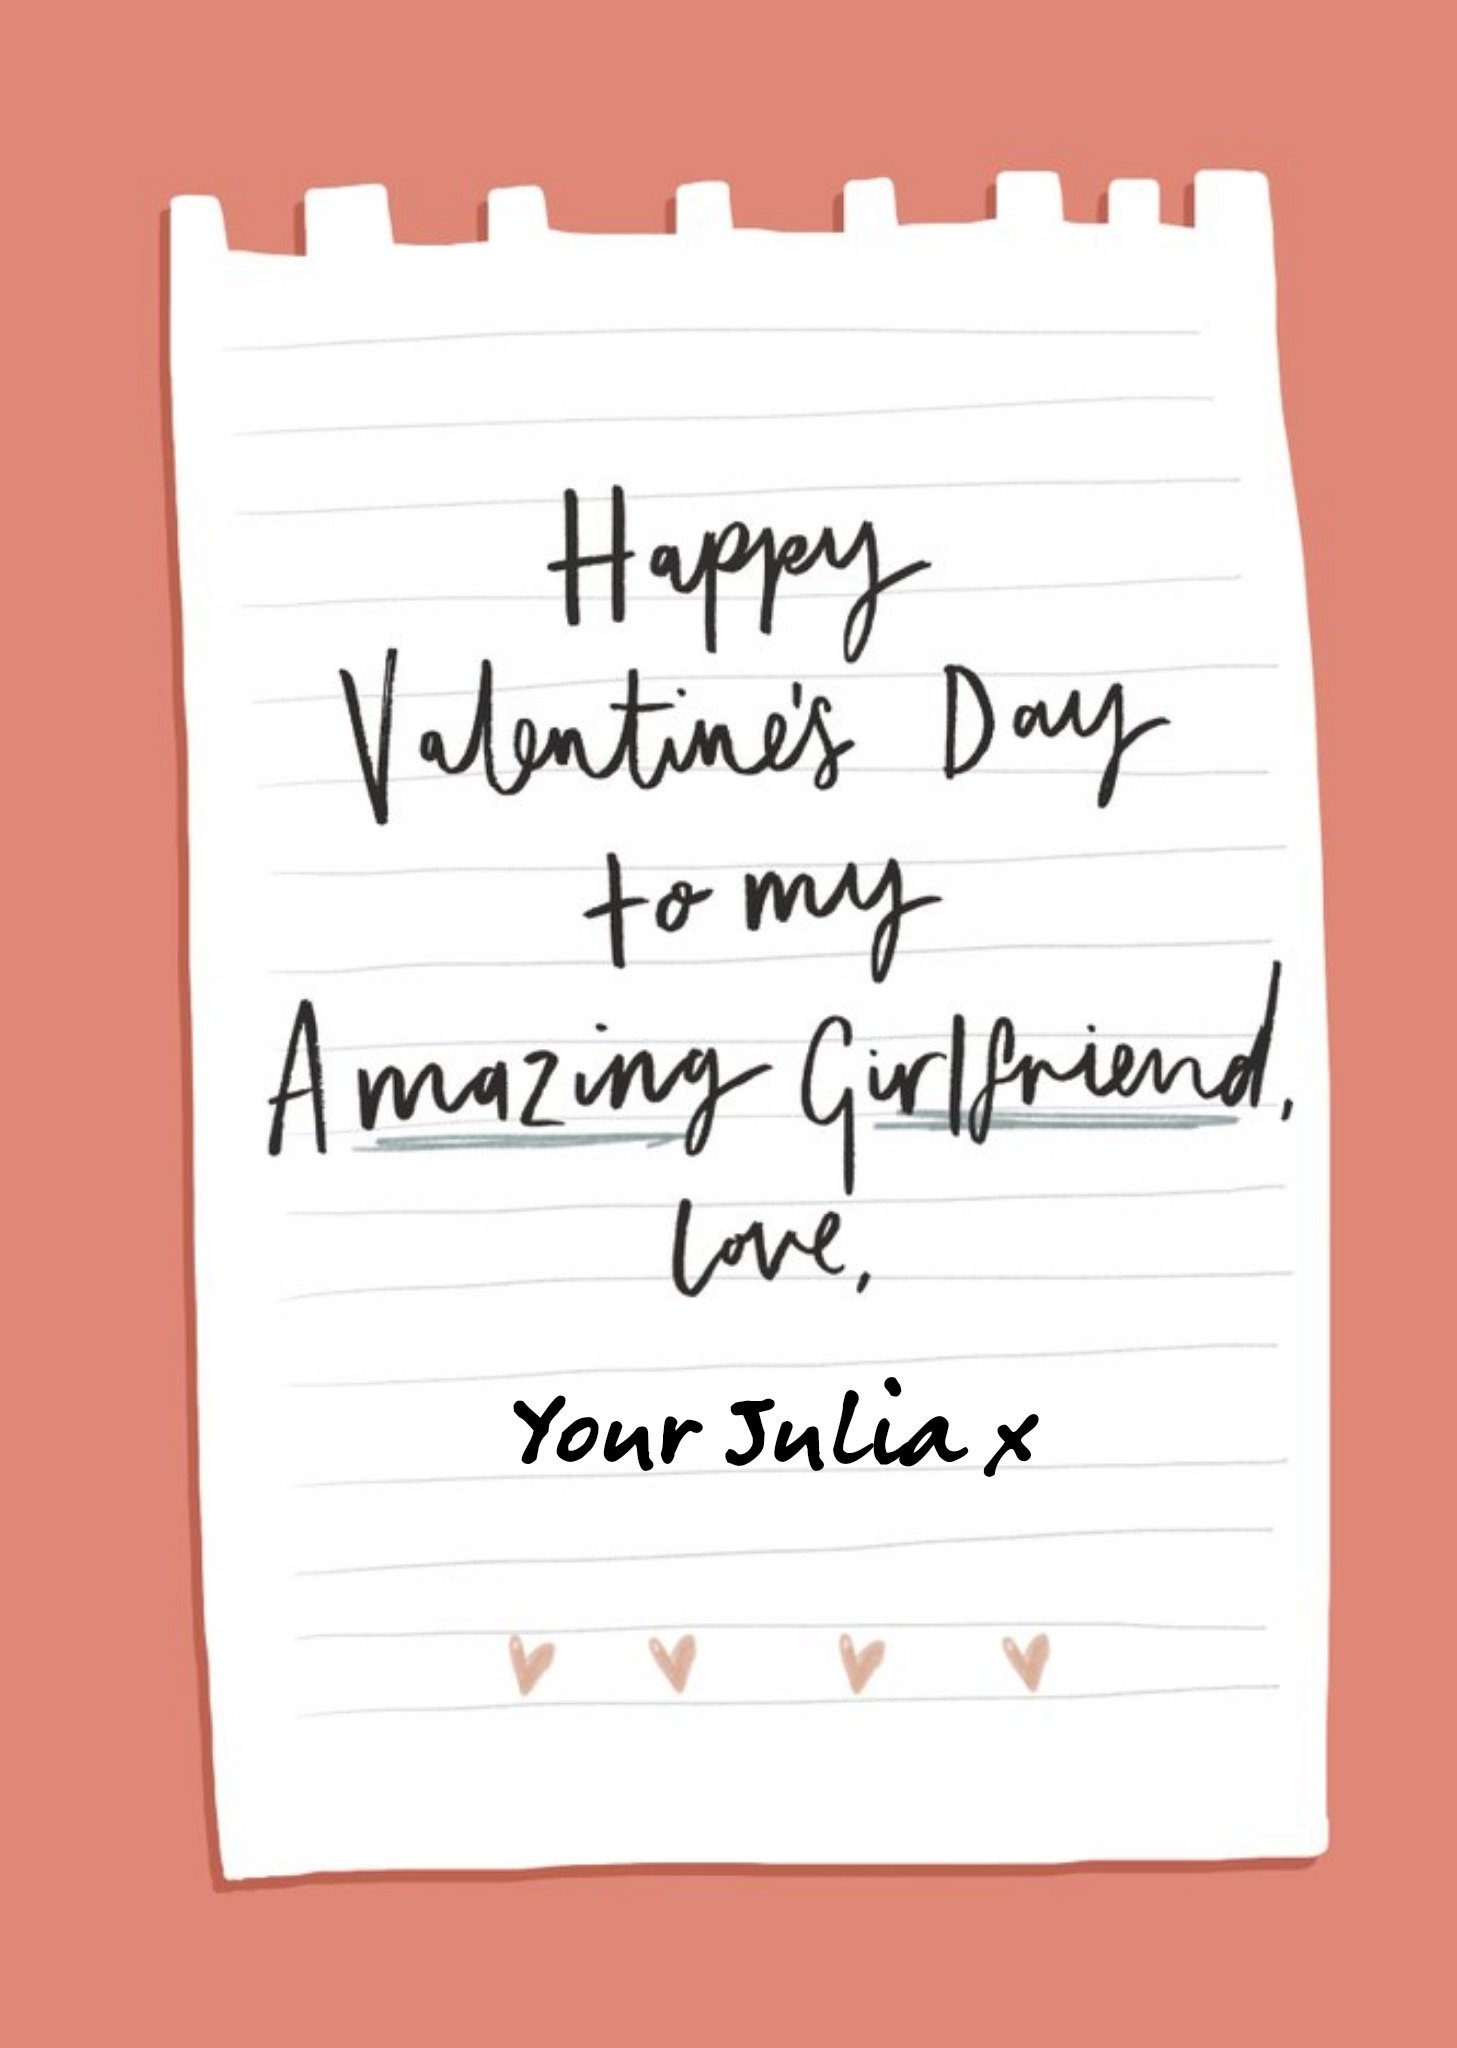 Love Hearts Sweet Sentiments Typographic Illustration LGBTQ+ Valentine's Card Ecard